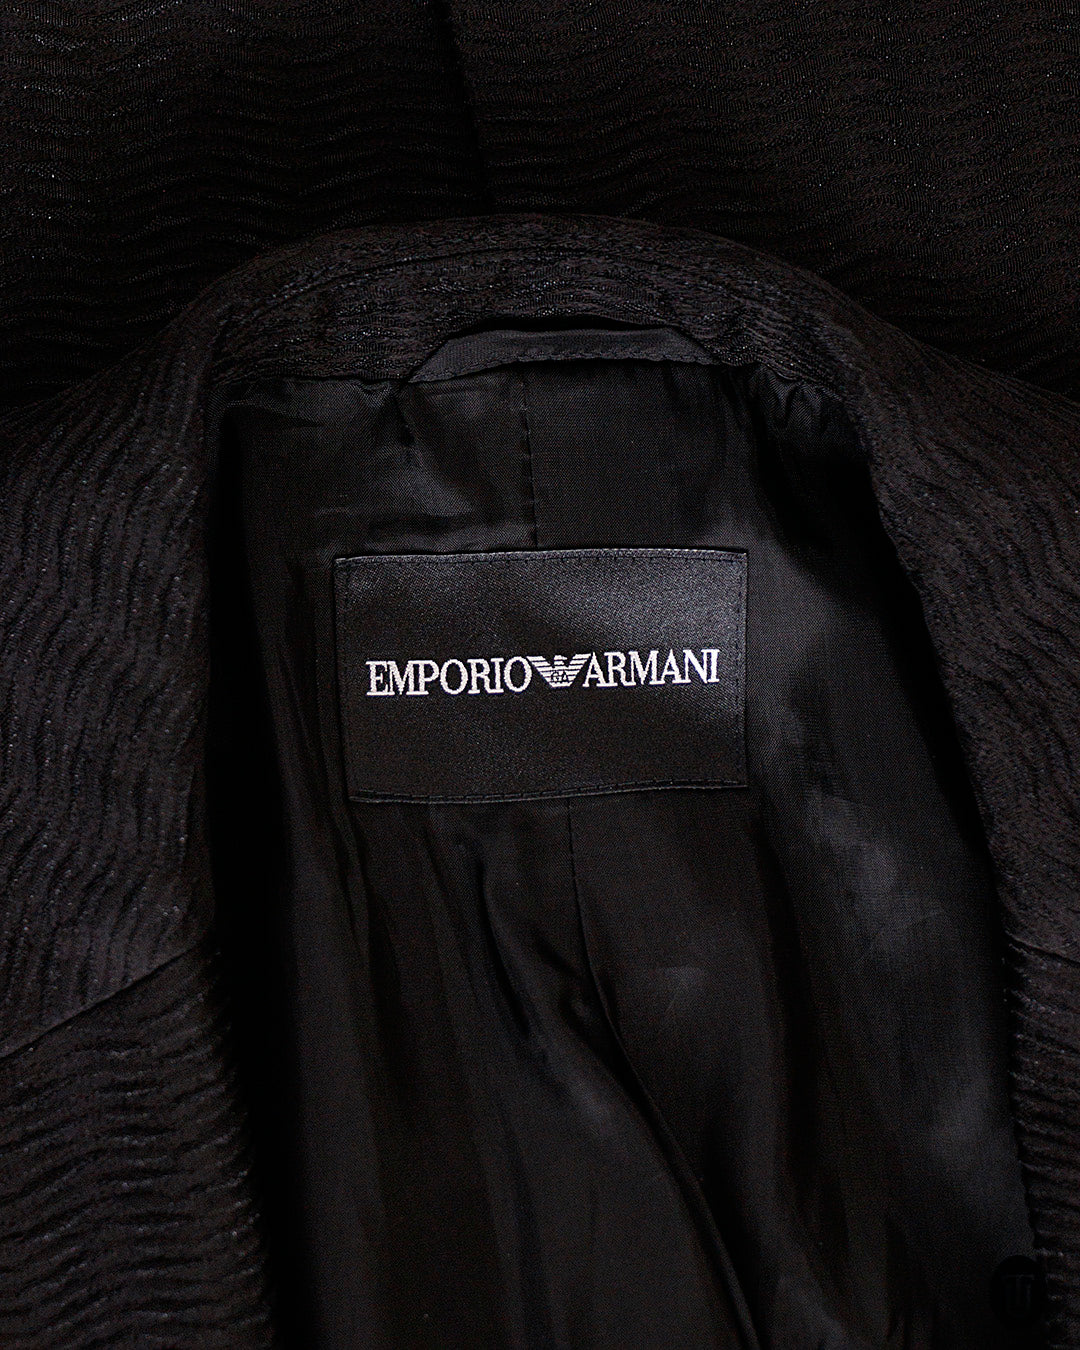 Emporio Armani Black Wool Blend Blazer S